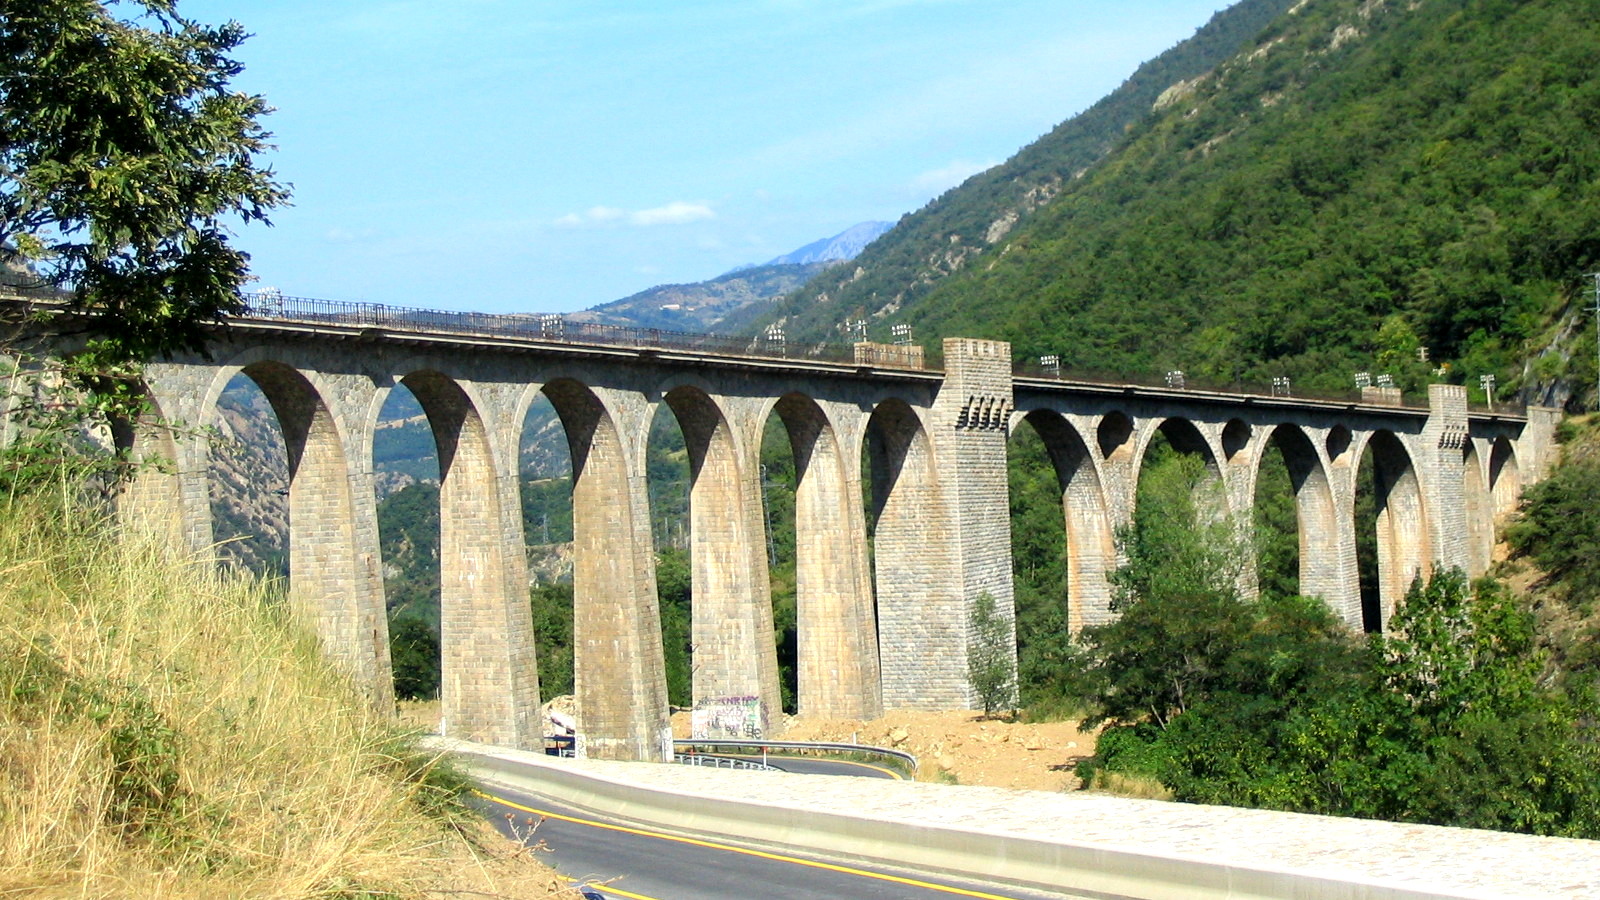 The Séjourné bridge